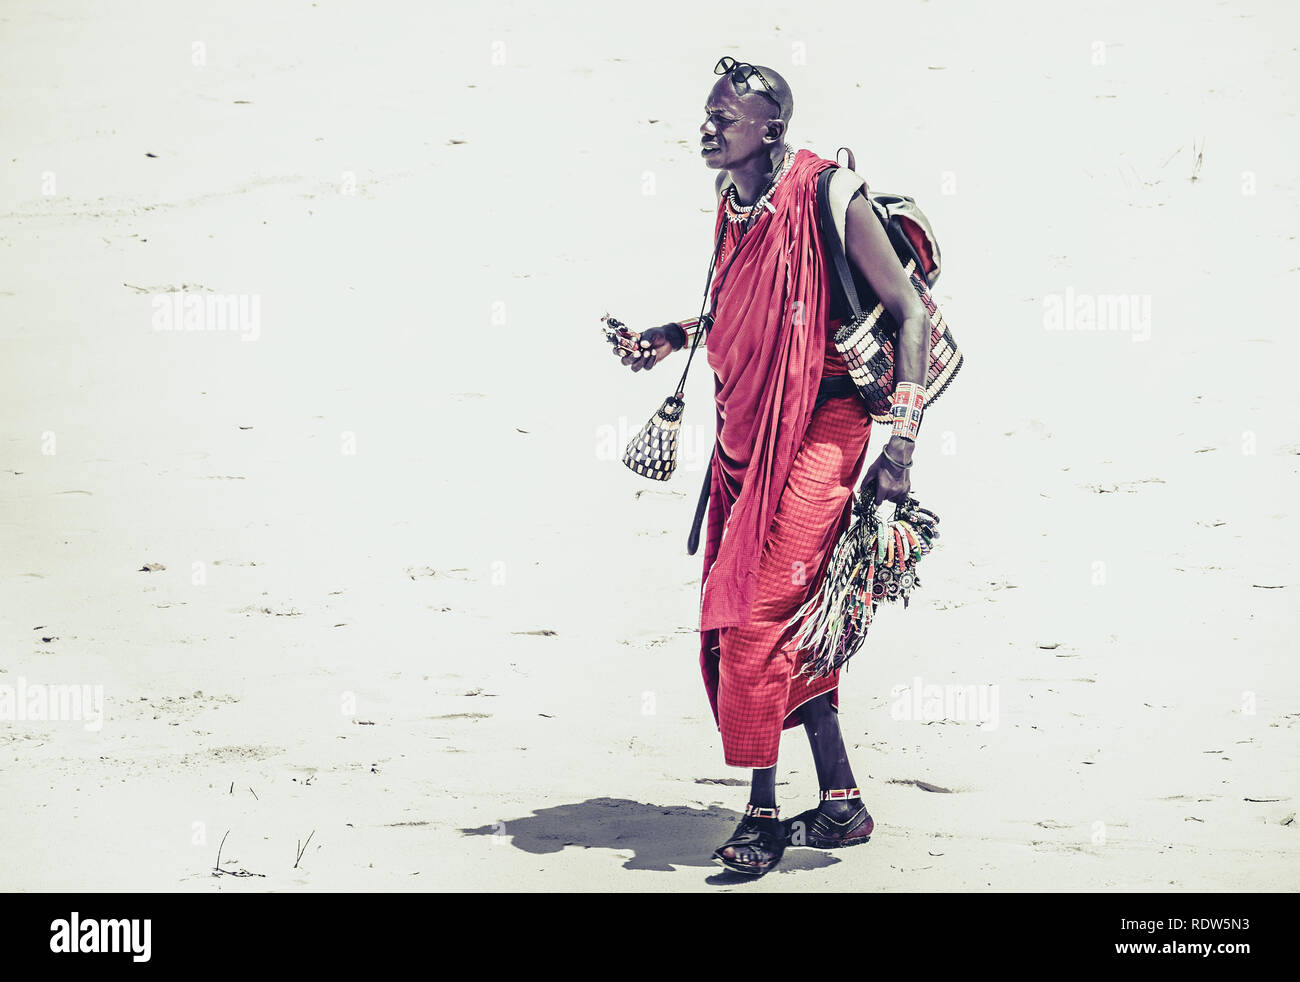 DIANI BEACH, KENYA - OCTOBER 14, 2018: Unindentified African man wearing traditional Masai clothes on Diani beach, Kenya Stock Photo